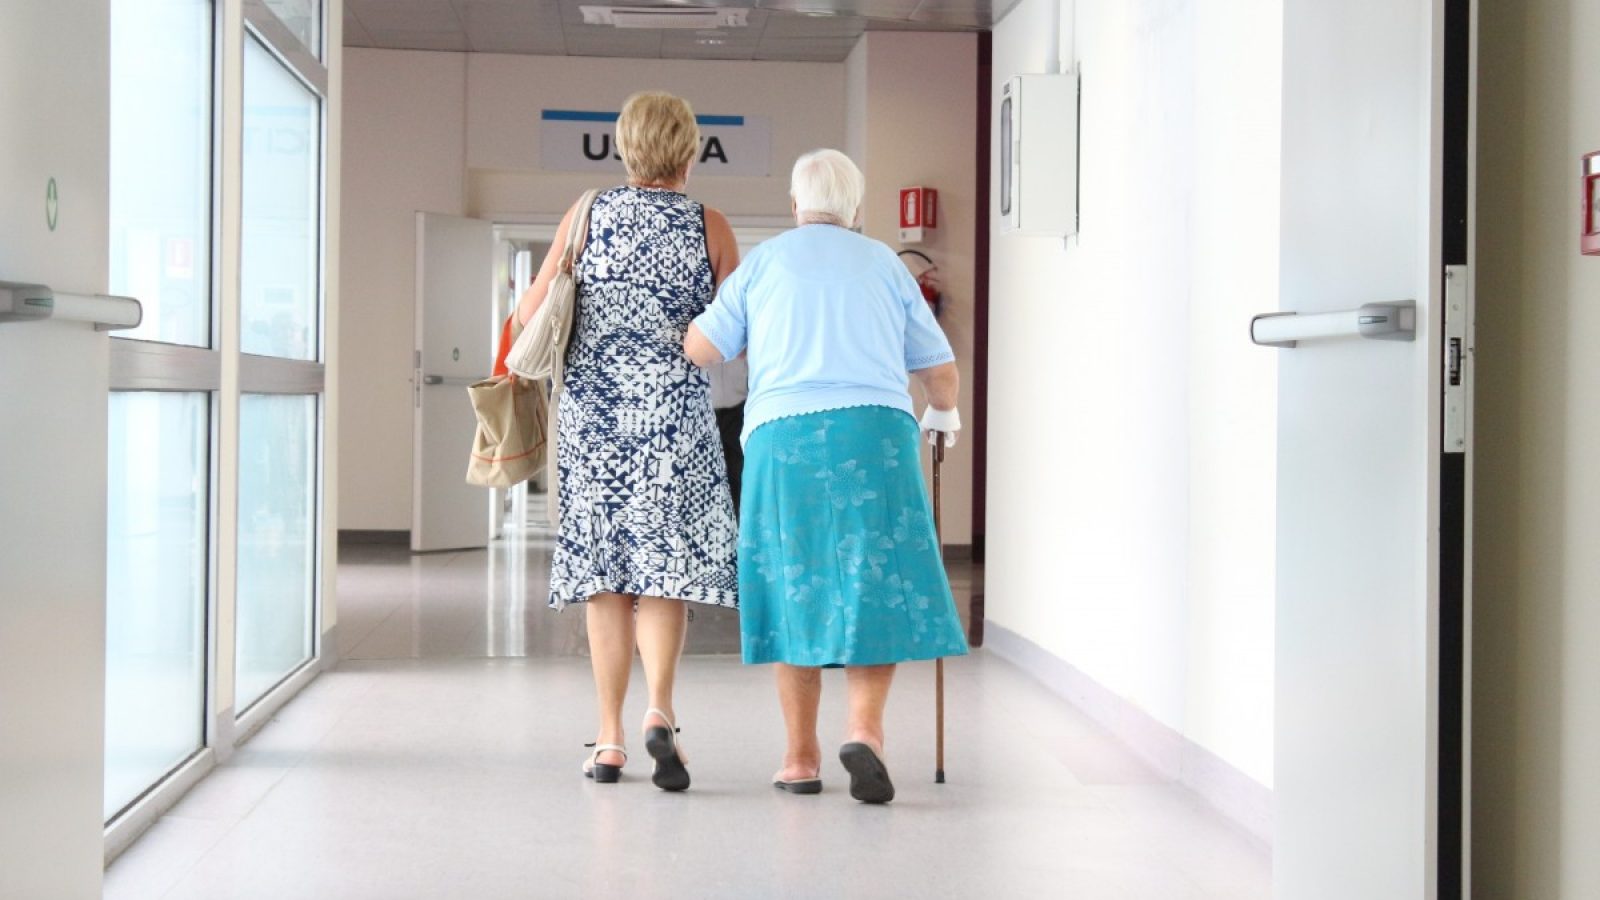 Elderly women walk down a hospital corridor